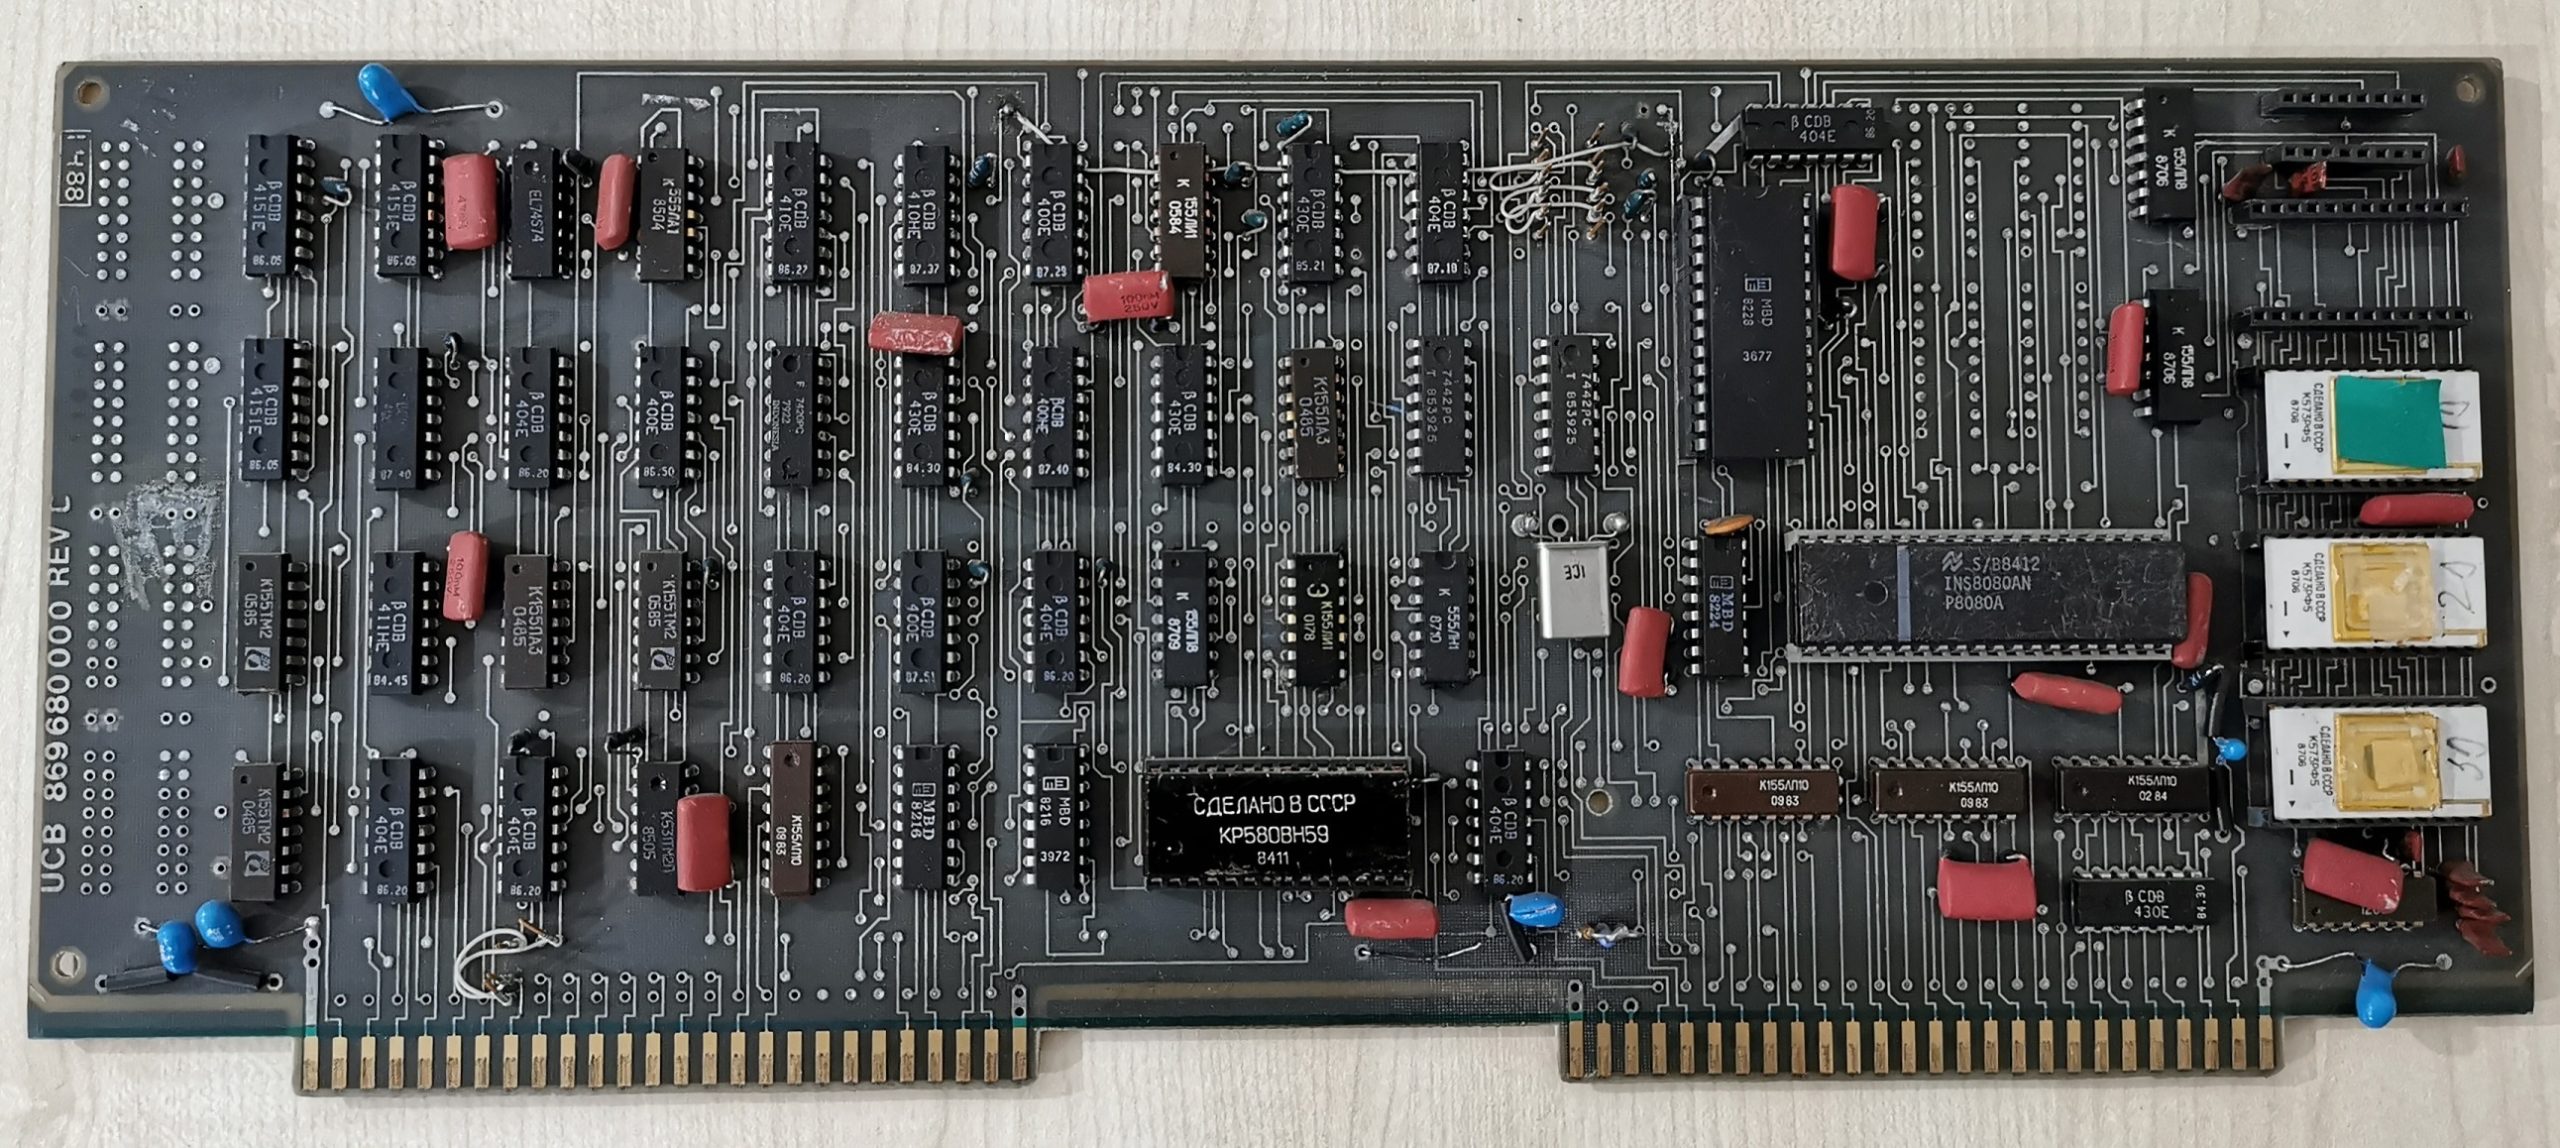 Placa procesor M188b